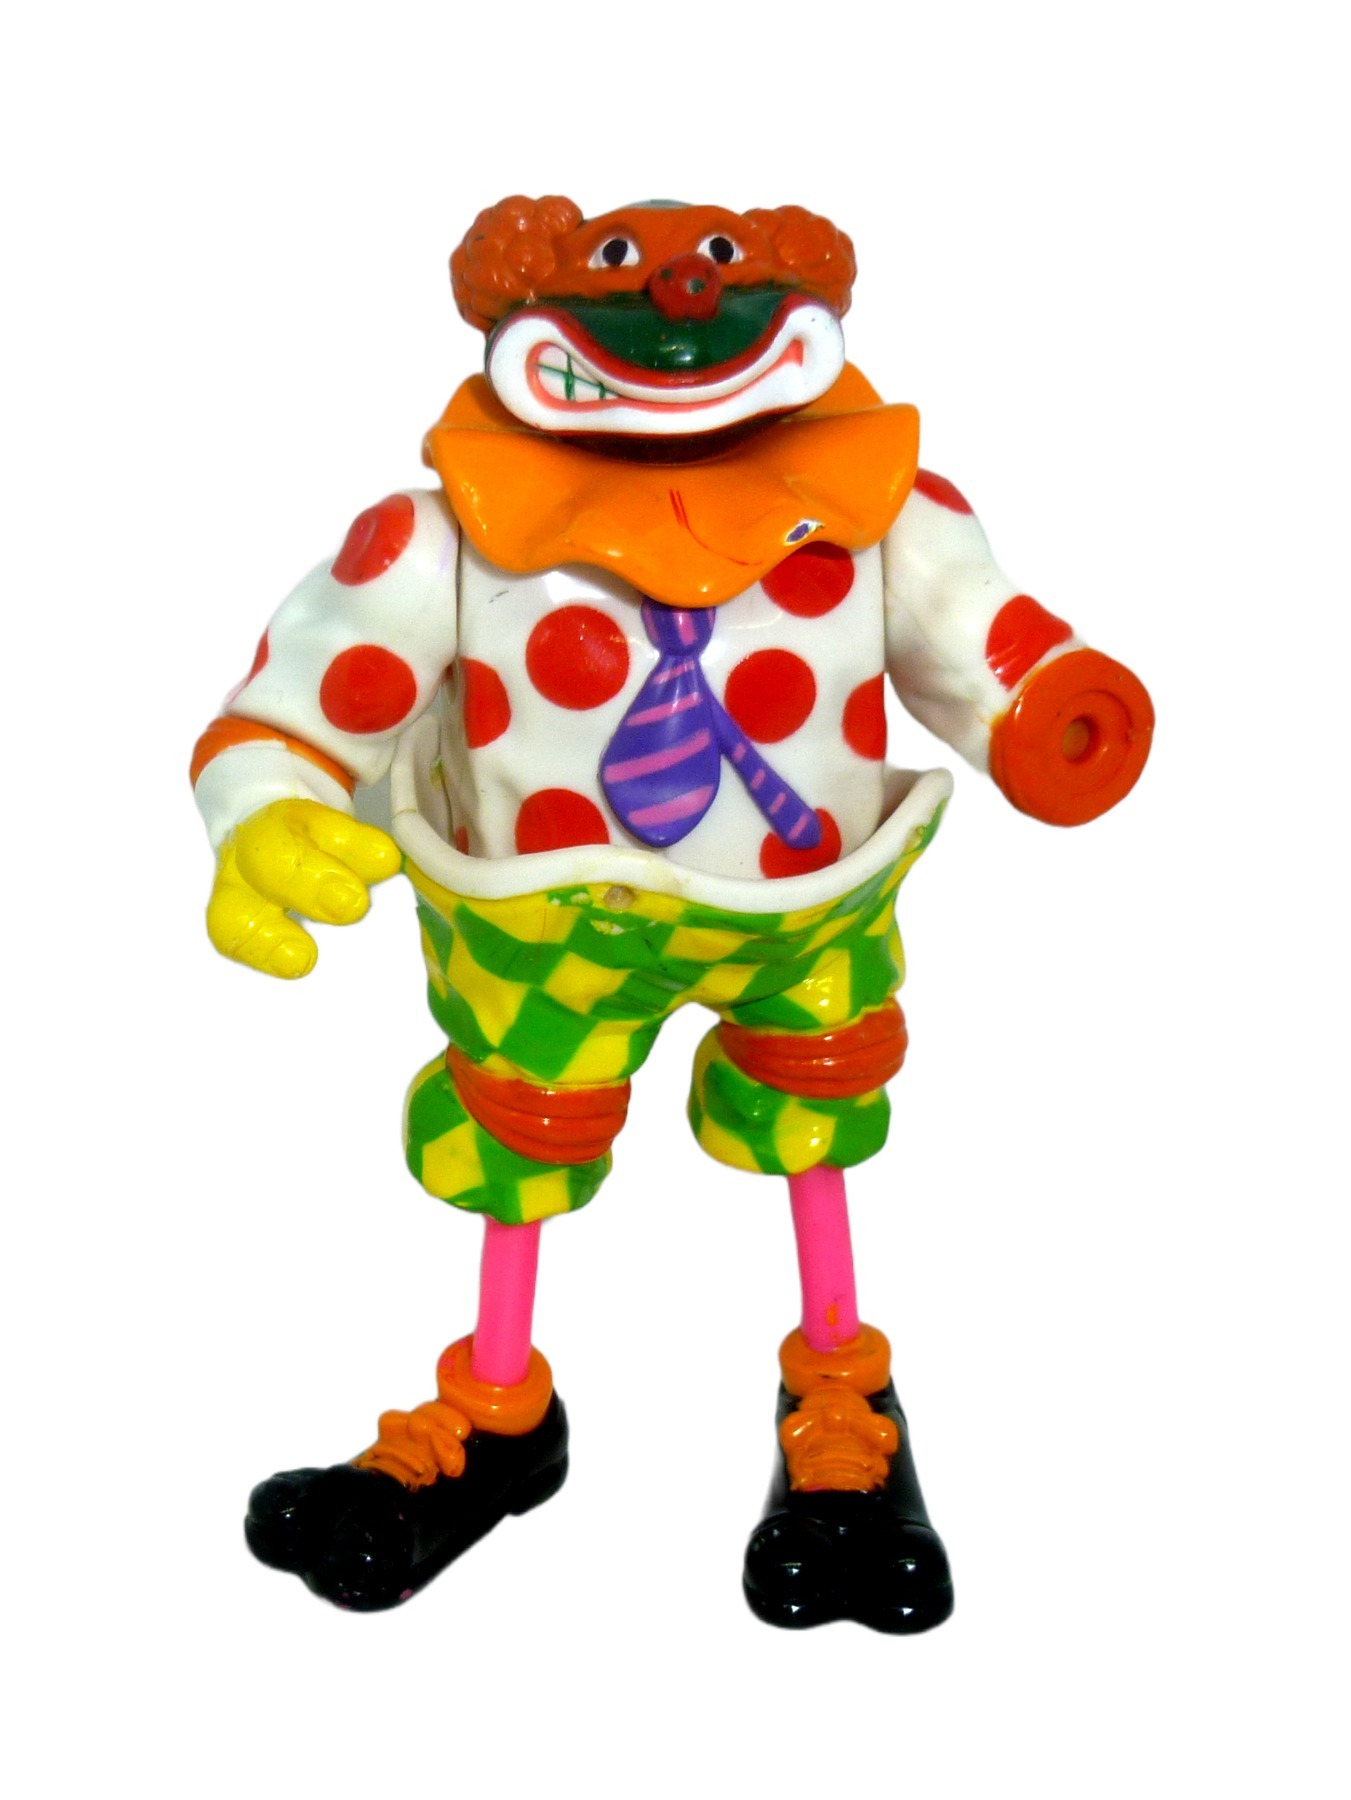 Clown Michelangelo / Michaelangelo 1992 Mirage Studios / Playmates Toys 2